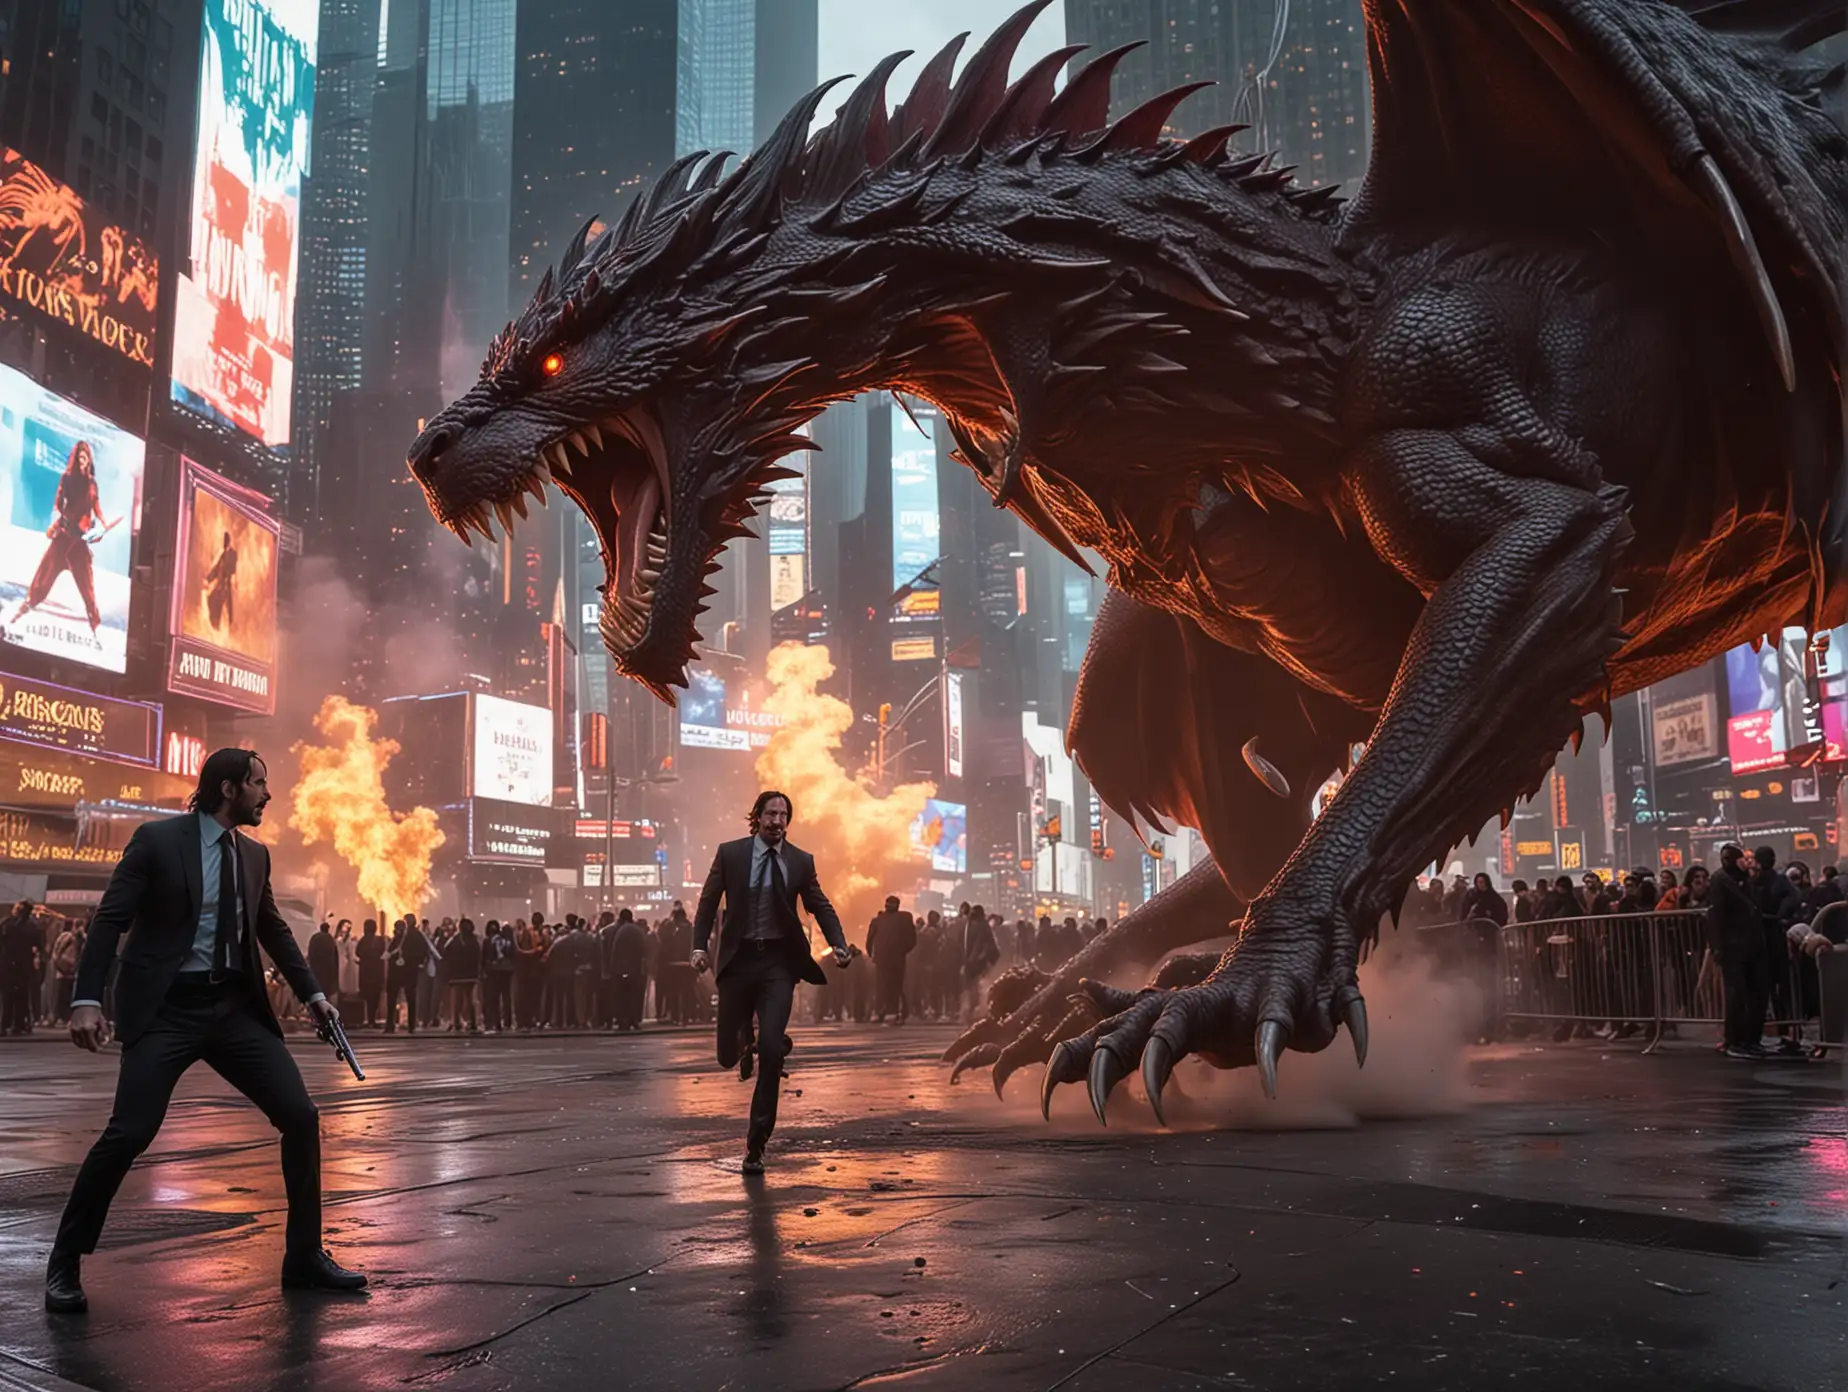 Epic Battle John Wick vs Dragon in Times Square